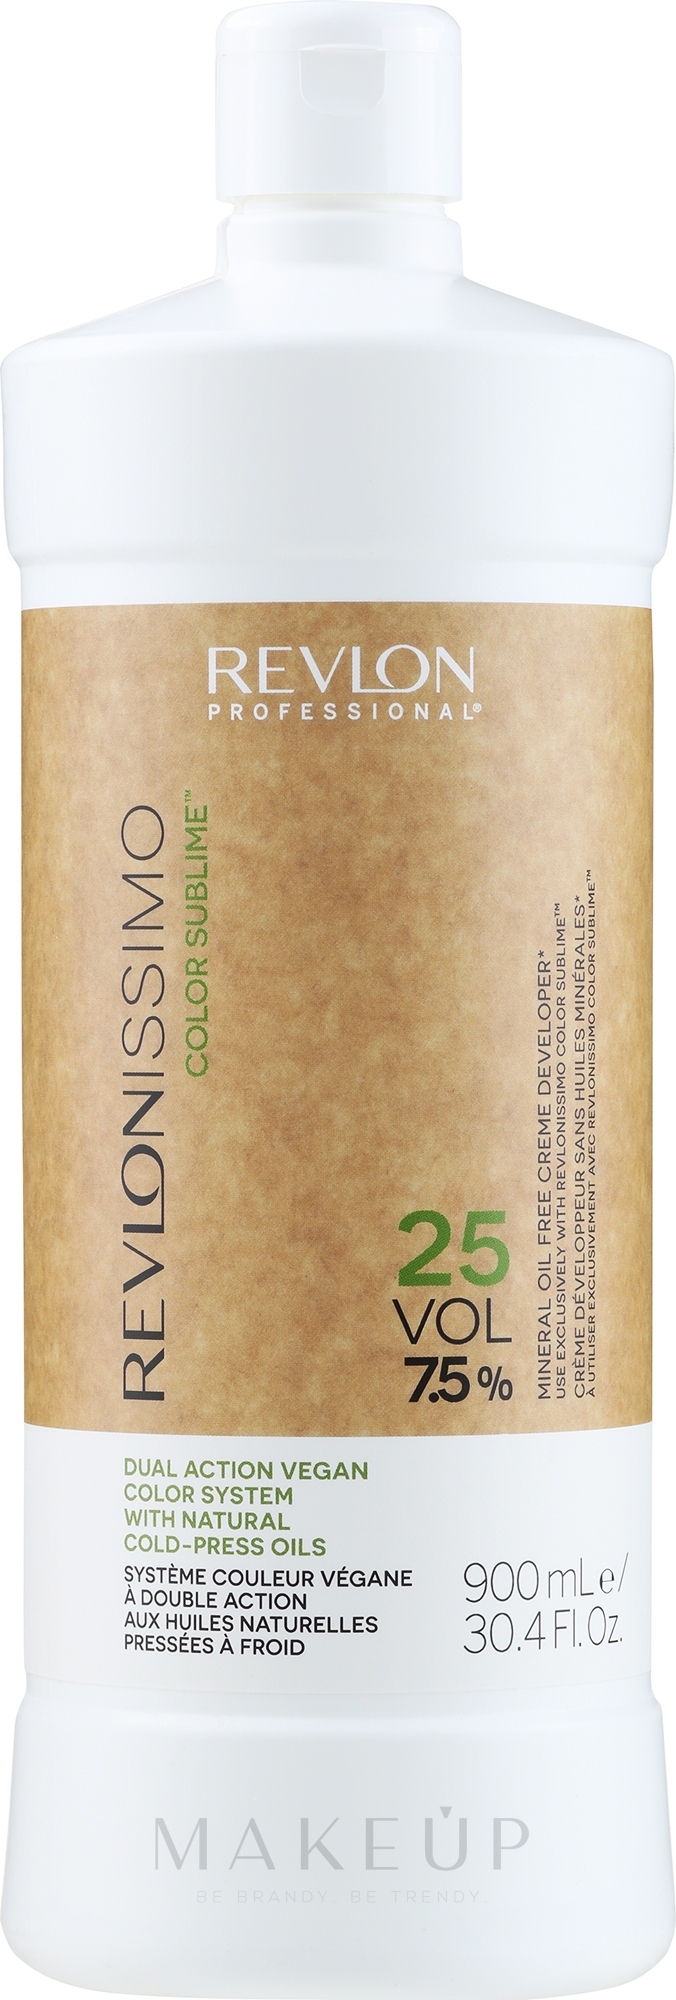 Creme-Peroxid 7,5% - Revlon Professional Revlonissimo Color Sublime Cream Oil Developer 25Vol 7,5% — Foto 900 ml